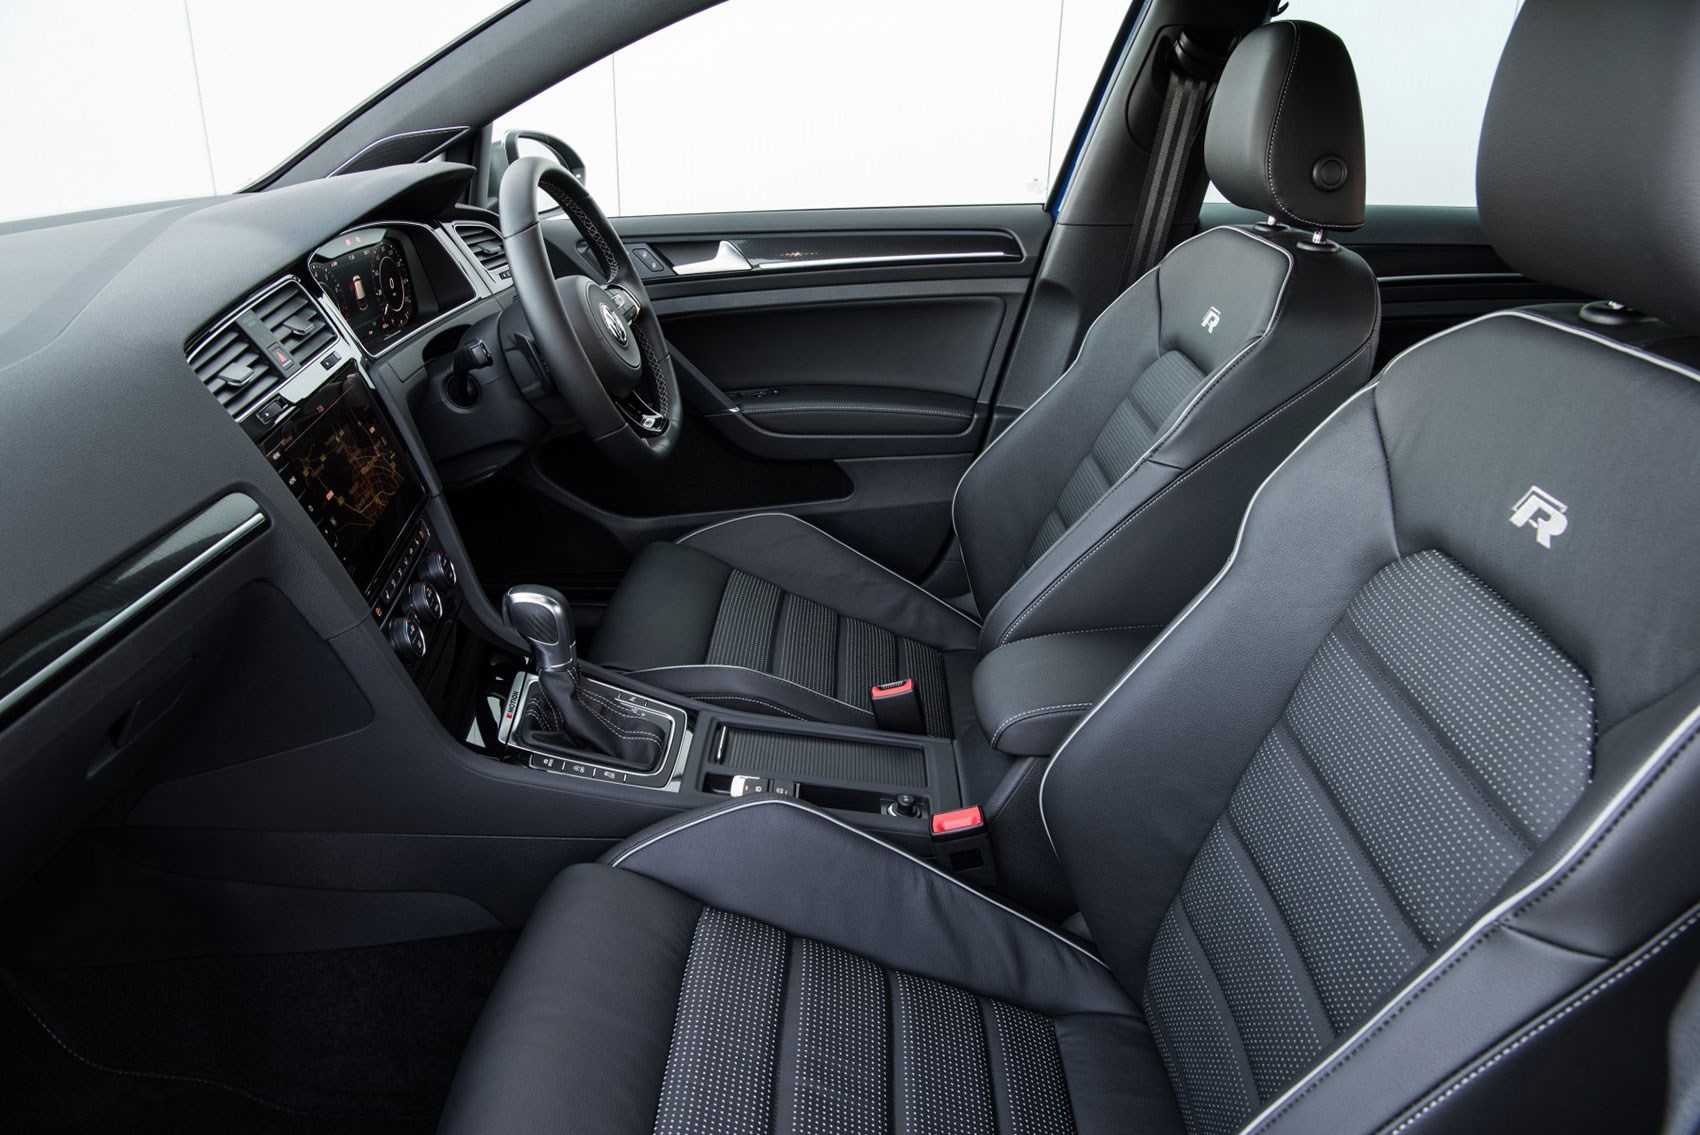 VW Golf R interior: pure class